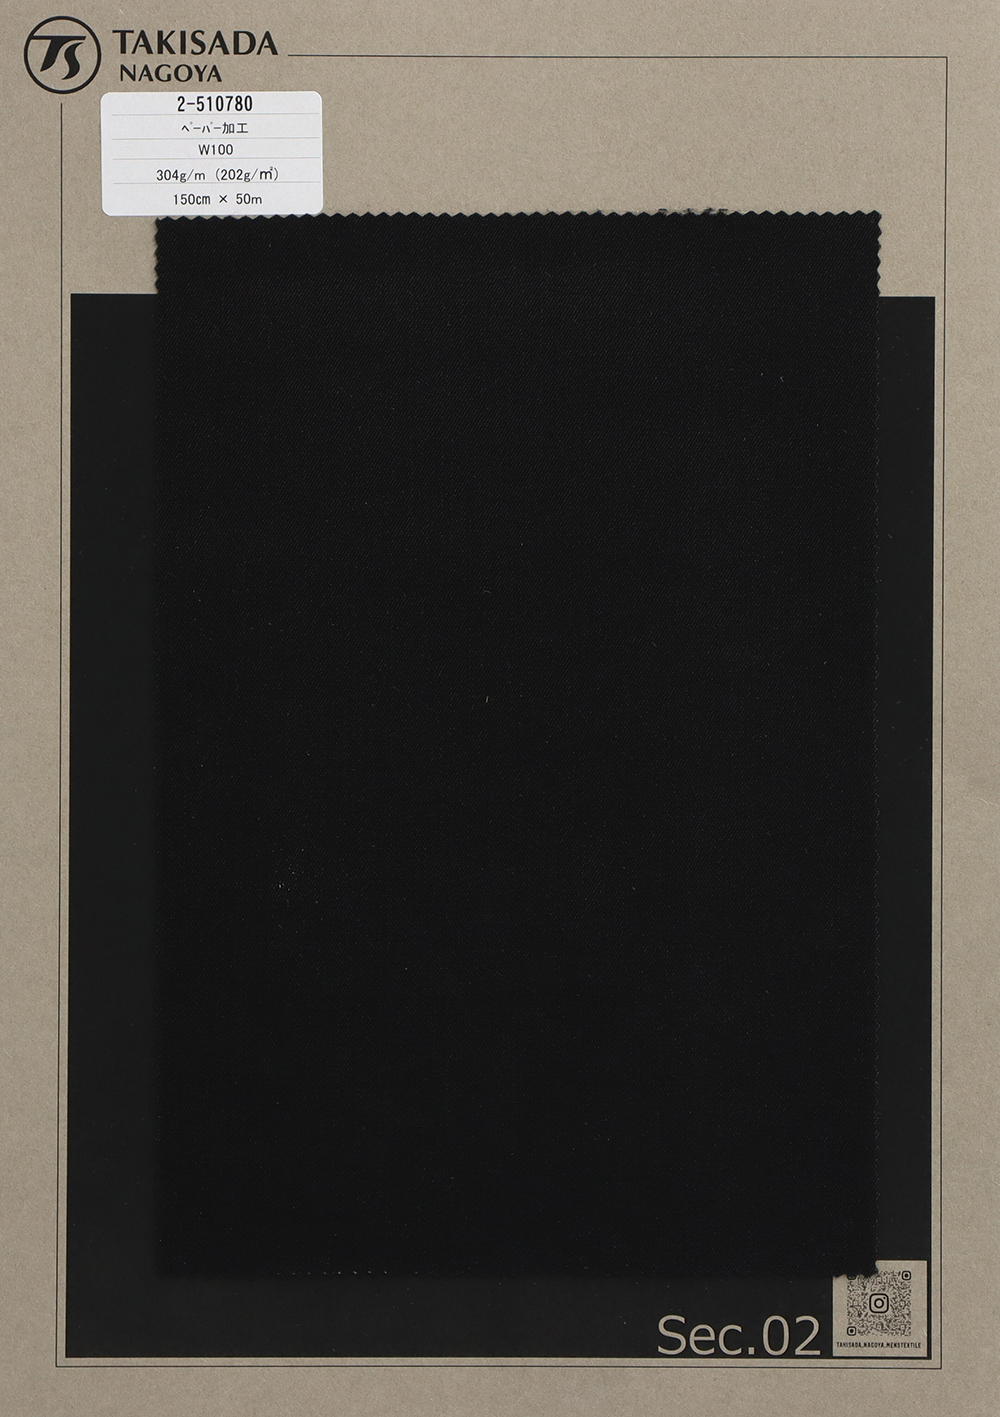 2-510780 Gabardine De Laine Effet Papier[Fabrication De Textile] Takisada Nagoya